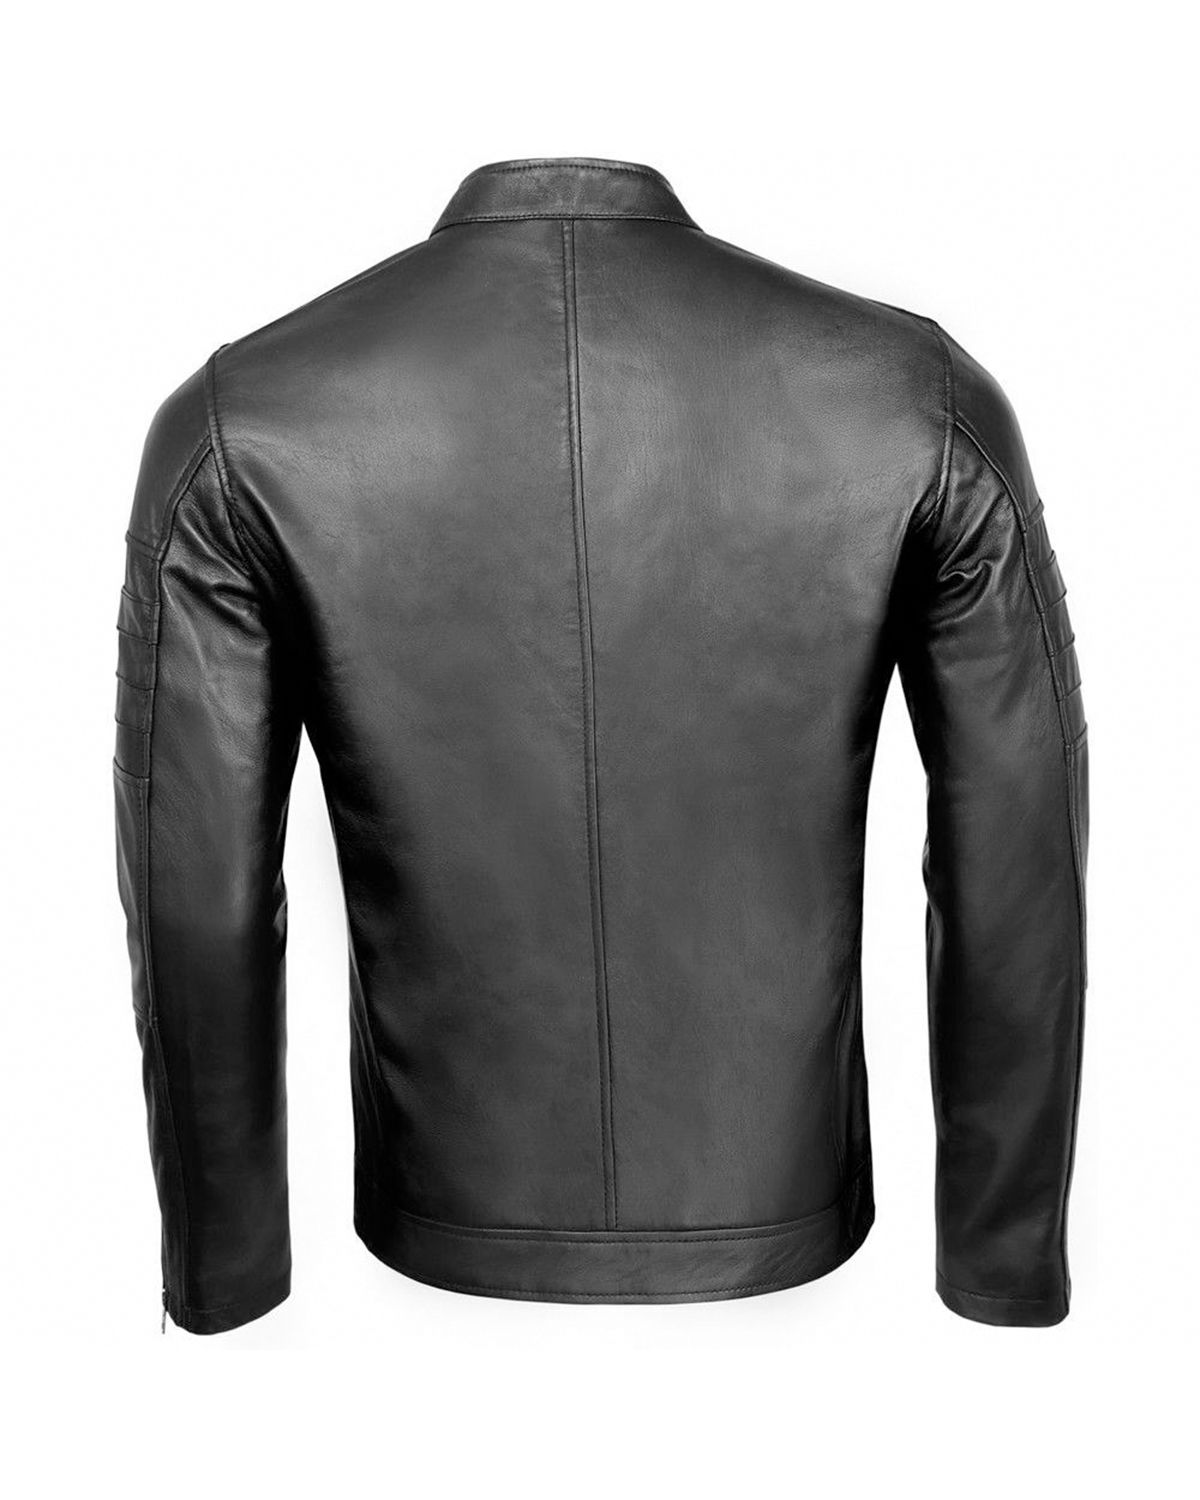 Elite Men's Stylish Black Biker Fashion Real Leather Jacket